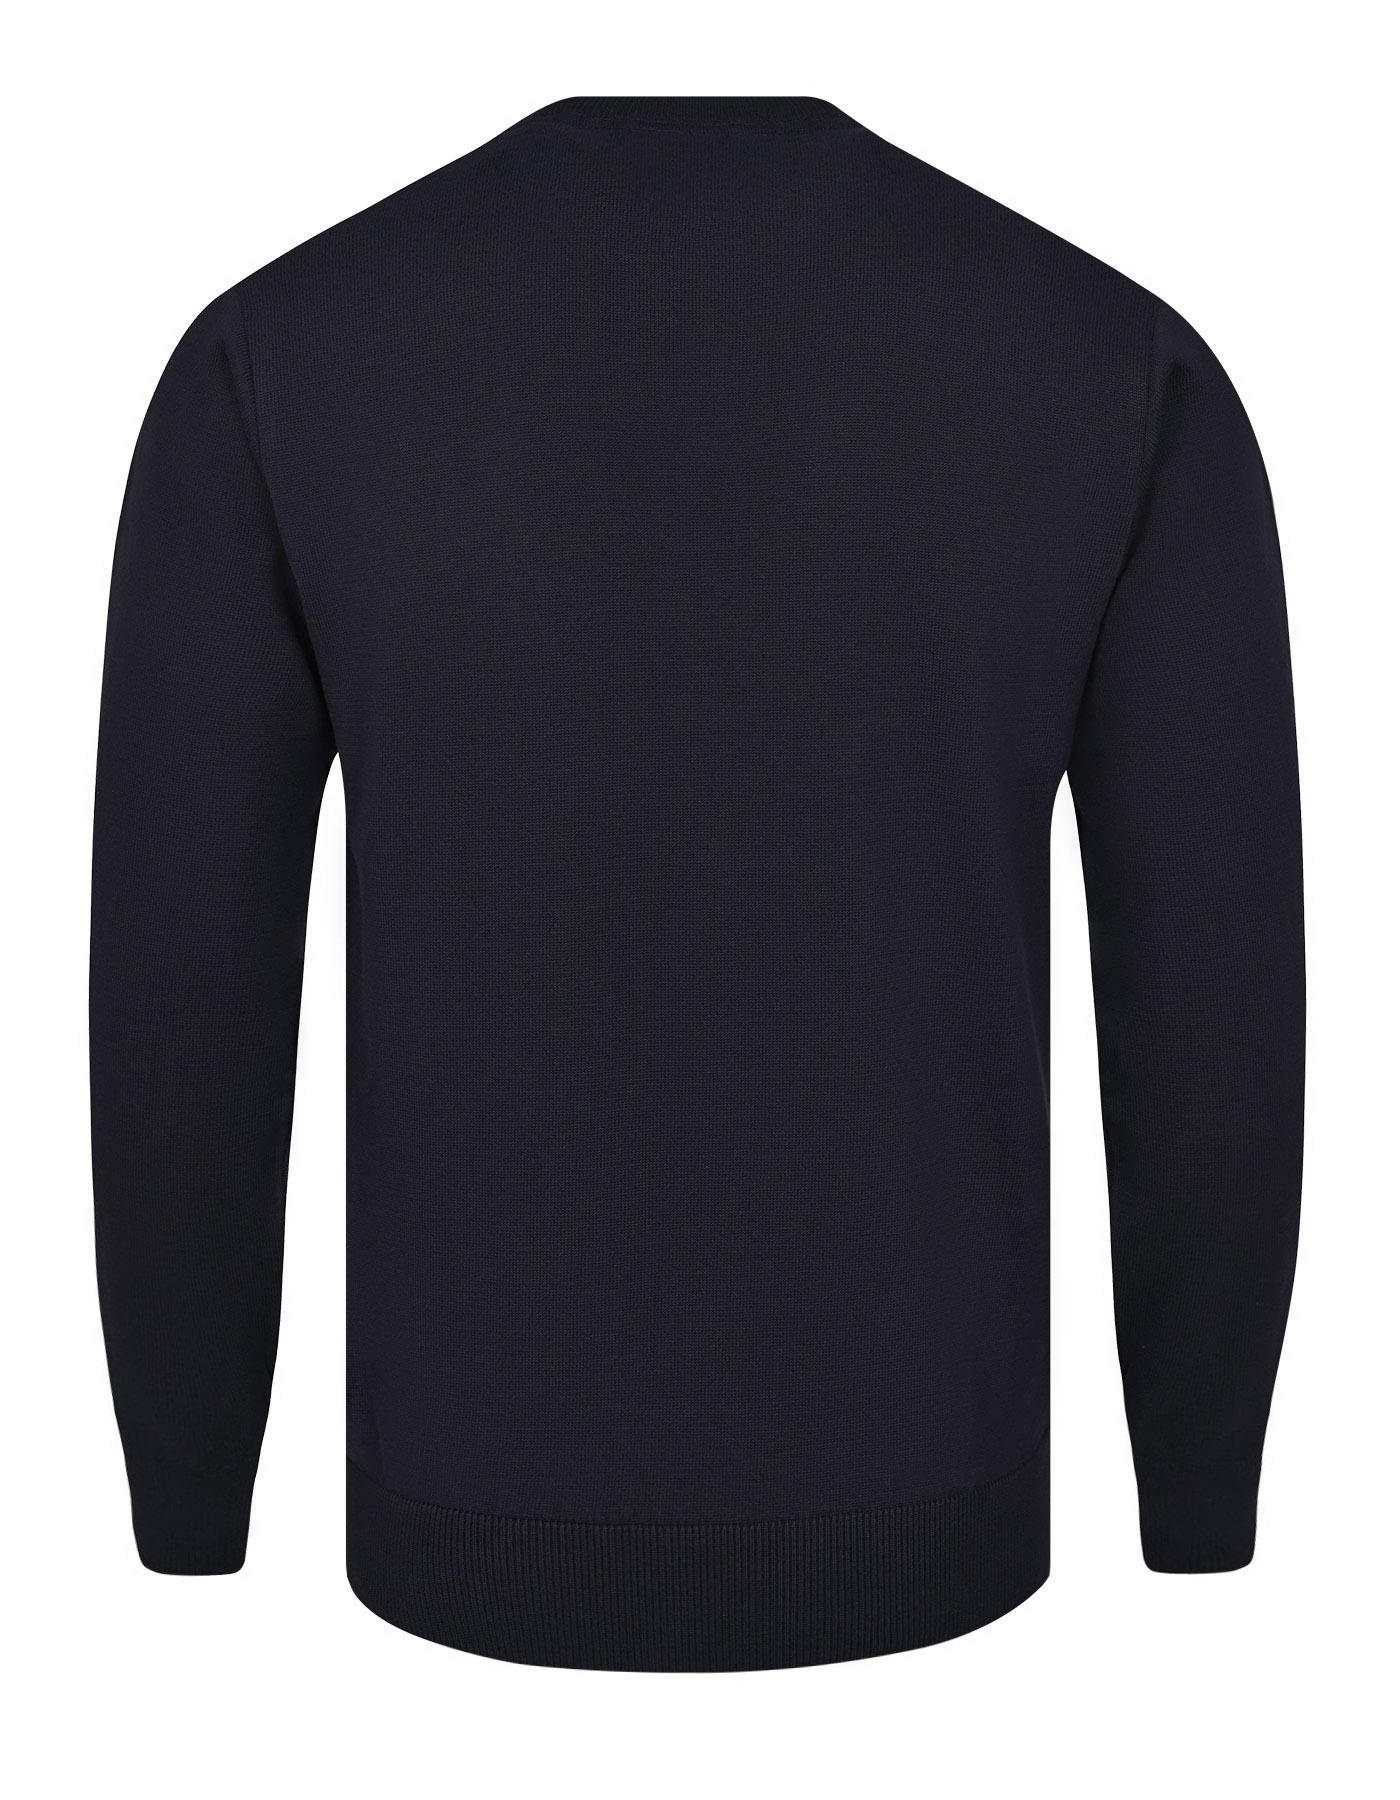 Black Crew Neck Sweater For Men